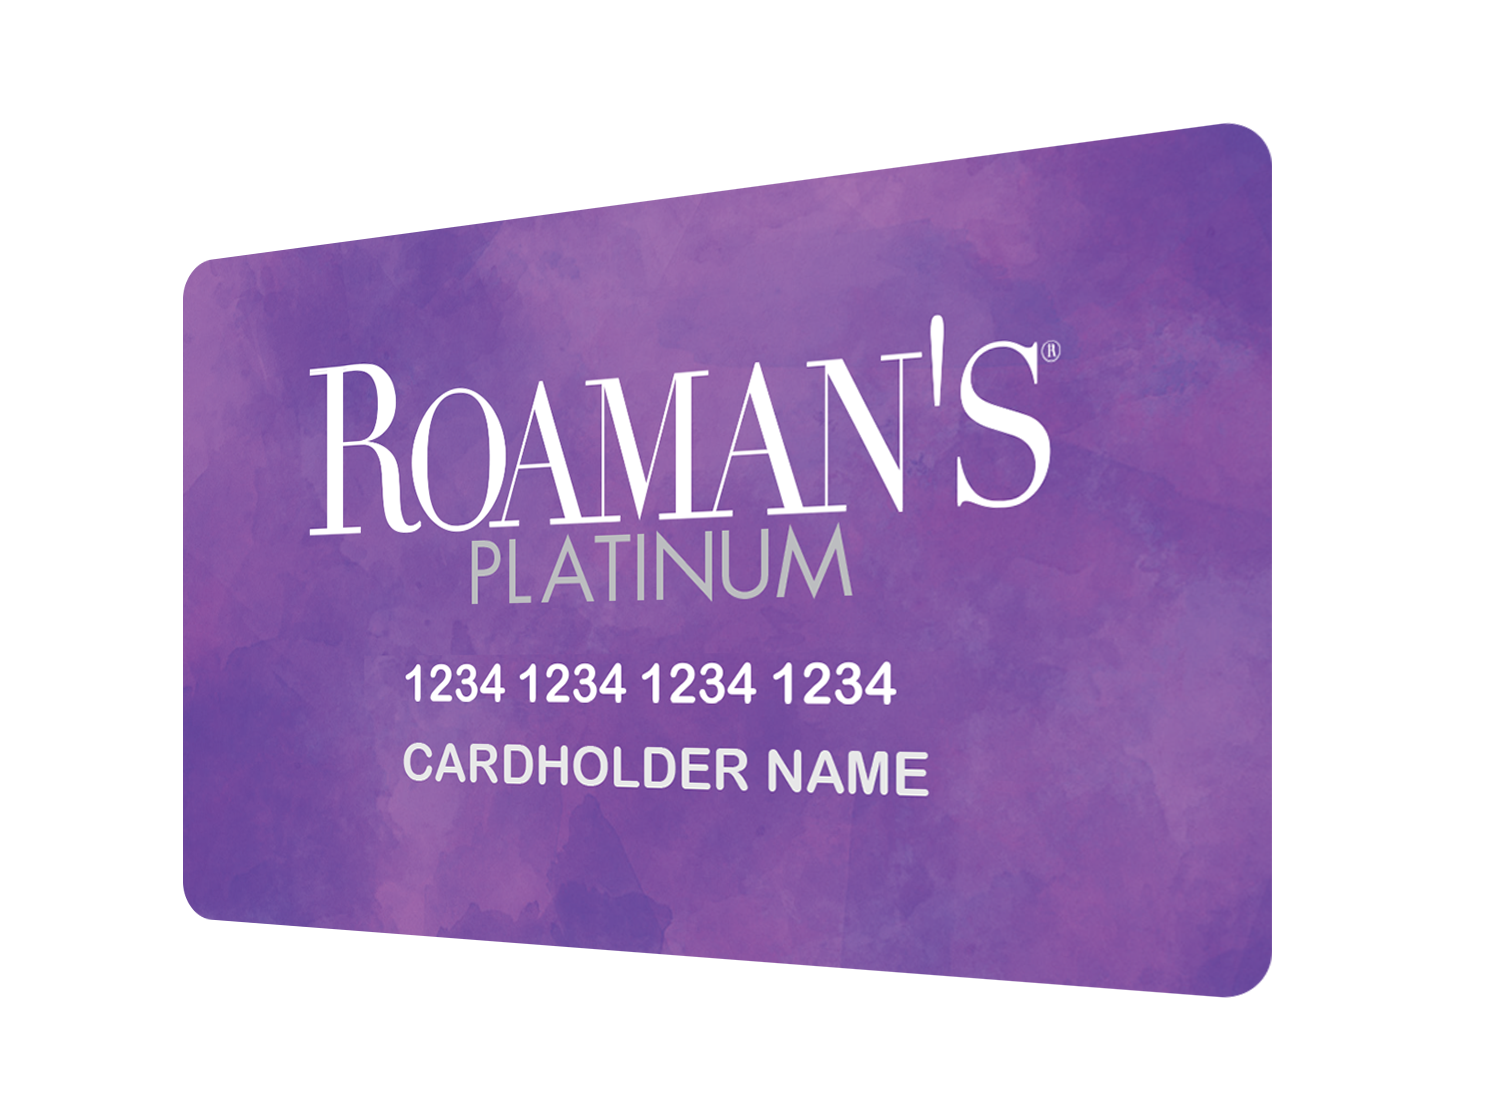 Roaman's Platinum Credit Card